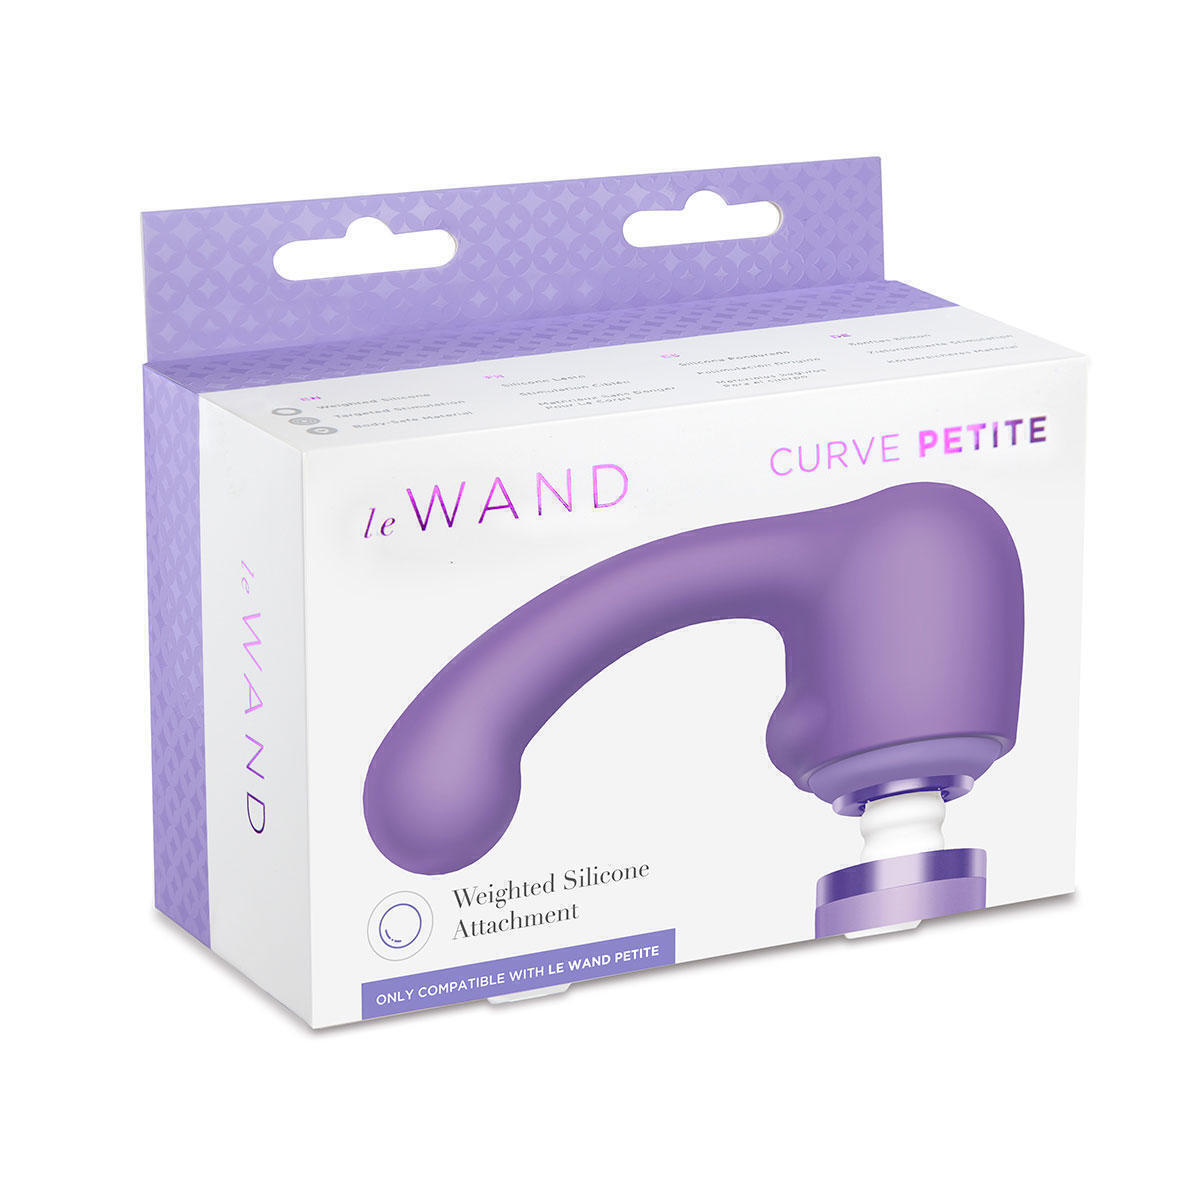 Насадка для мини-вибромассажера Le Wand Petite Curve утяжеленная, фиолетовая